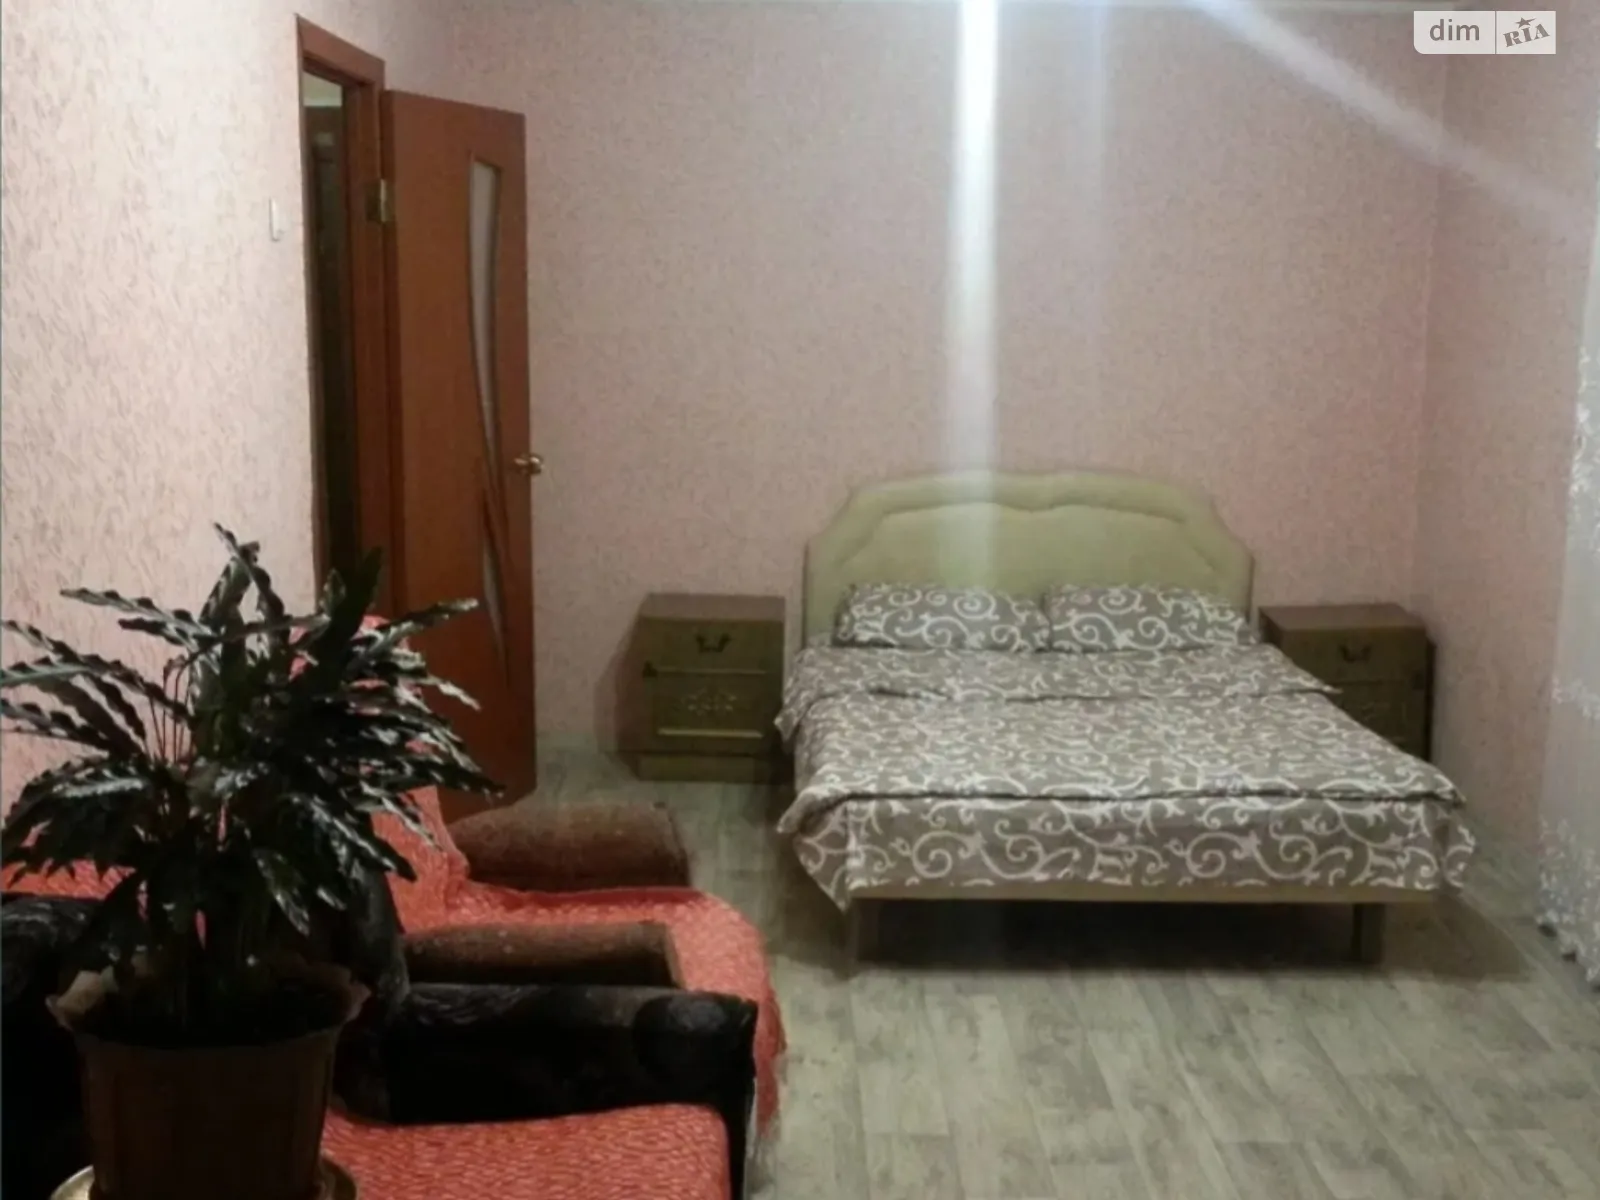 Сдается в аренду 1-комнатная квартира в Славянске, цена: 800 грн